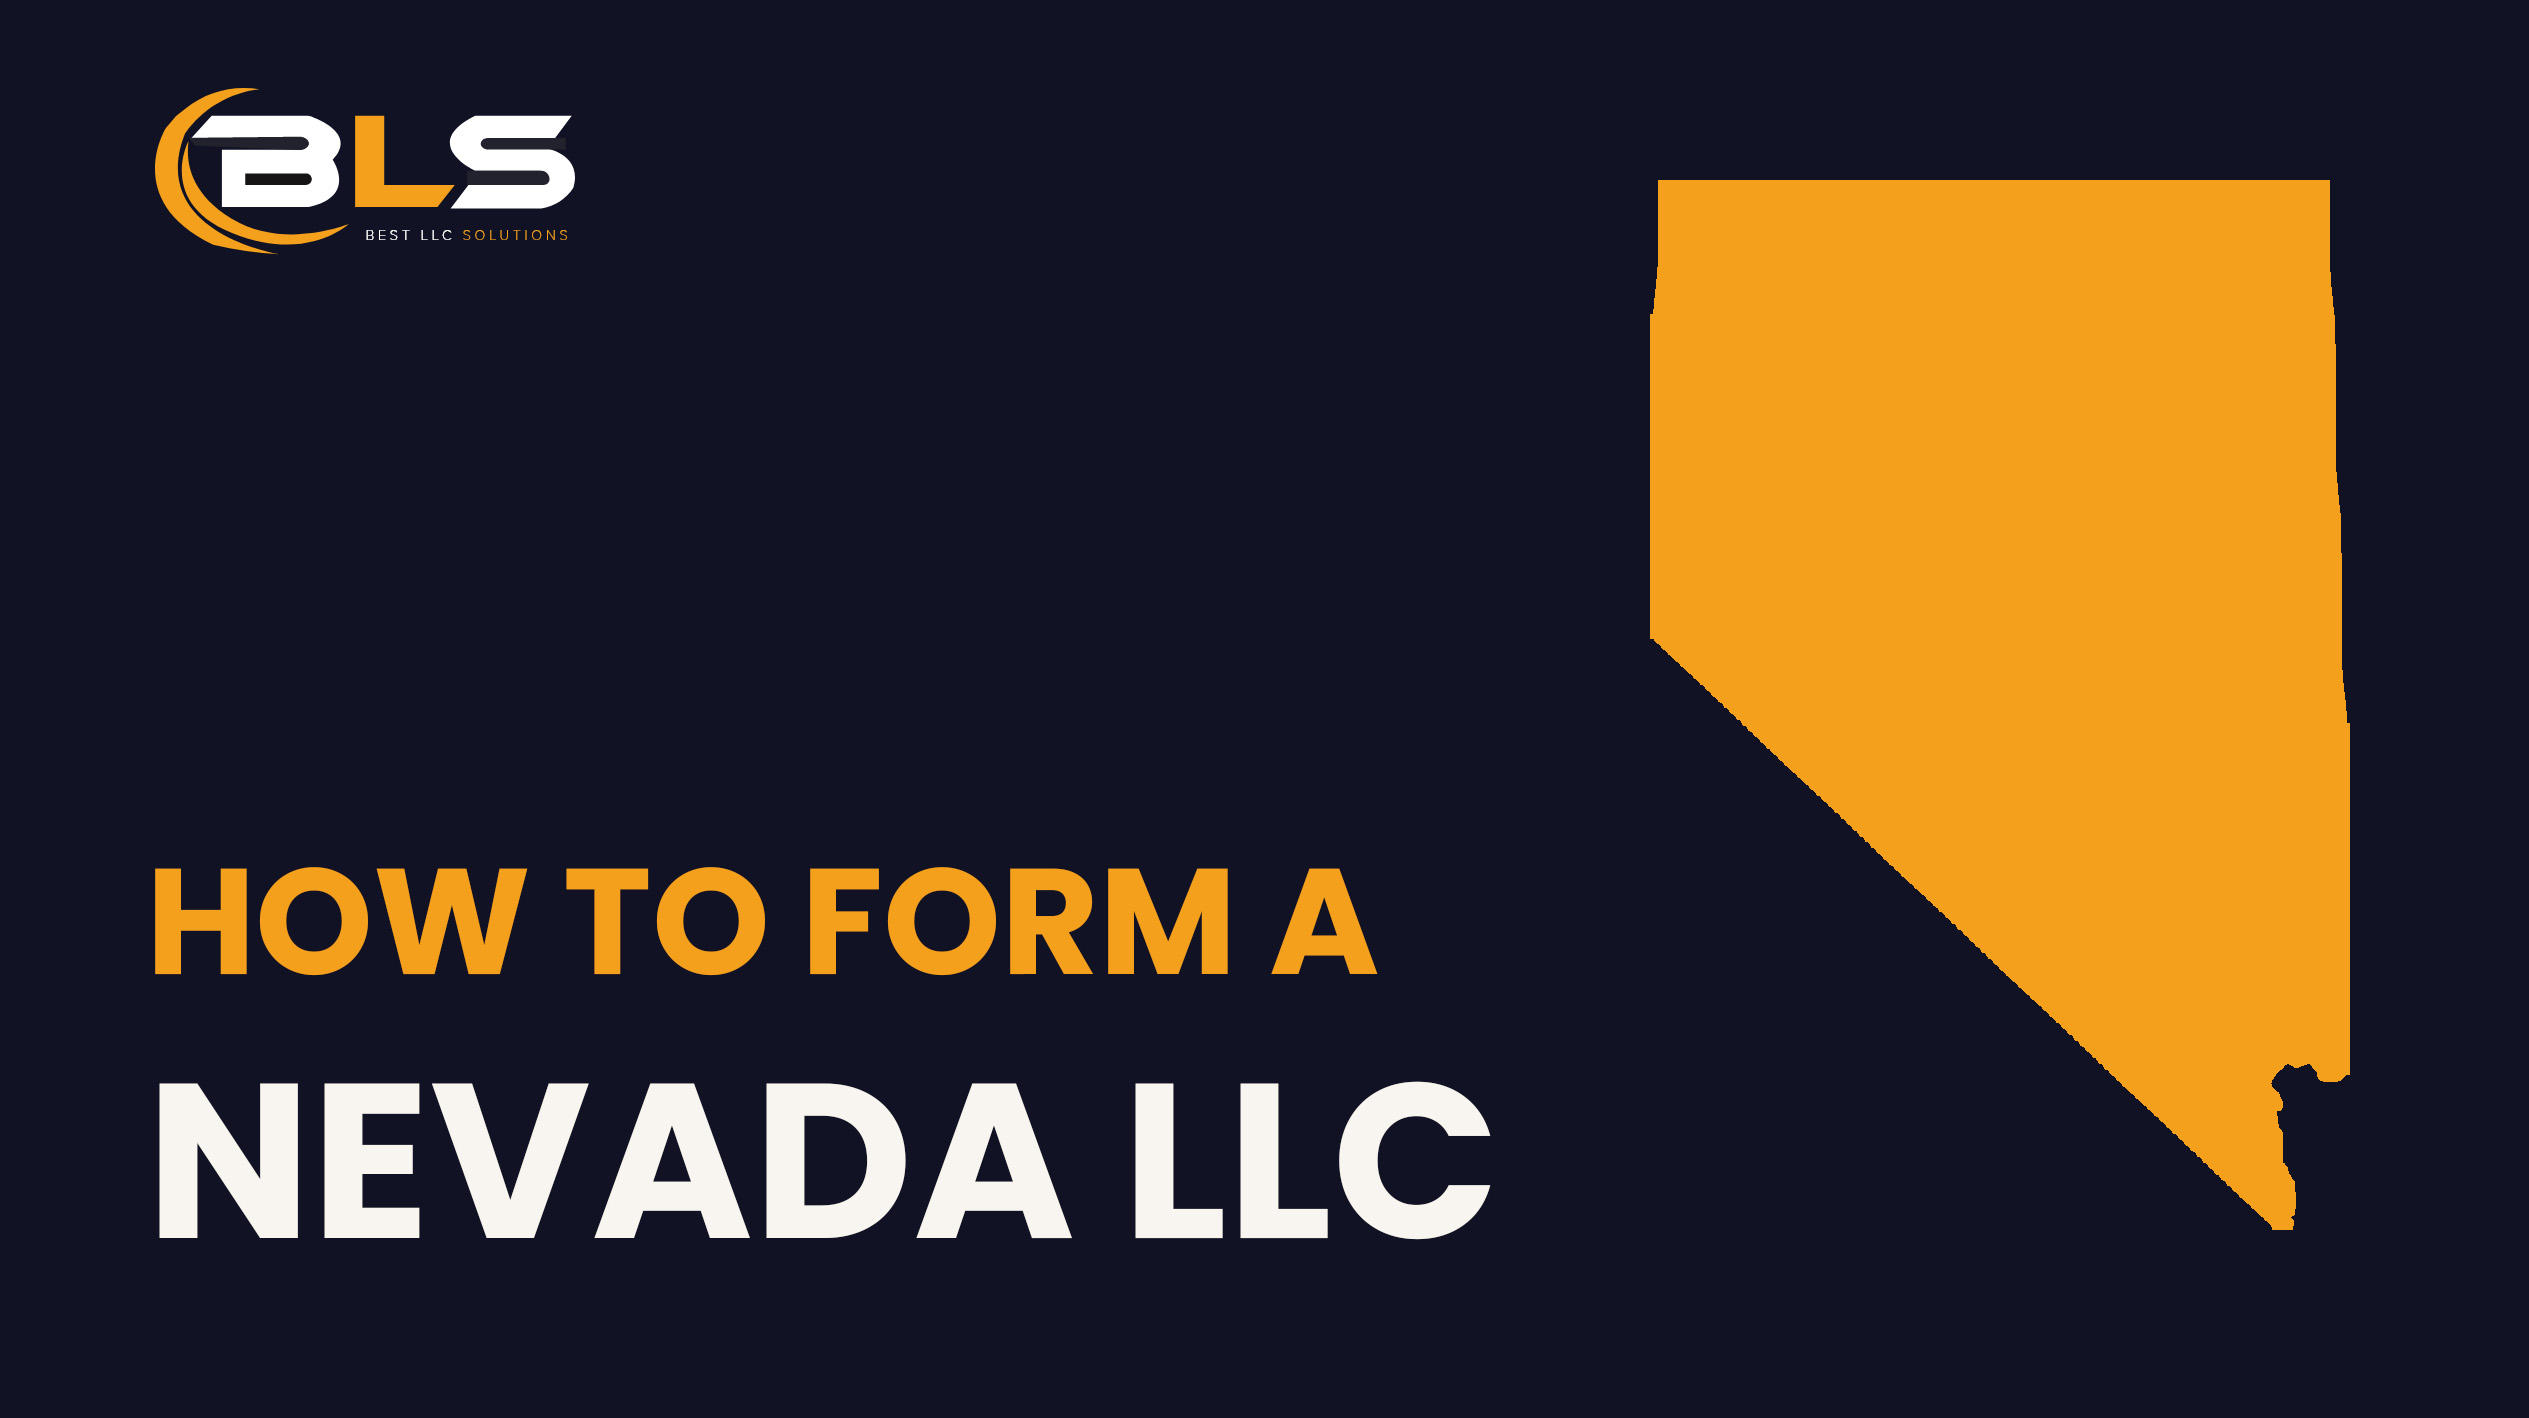 Nevada LLC